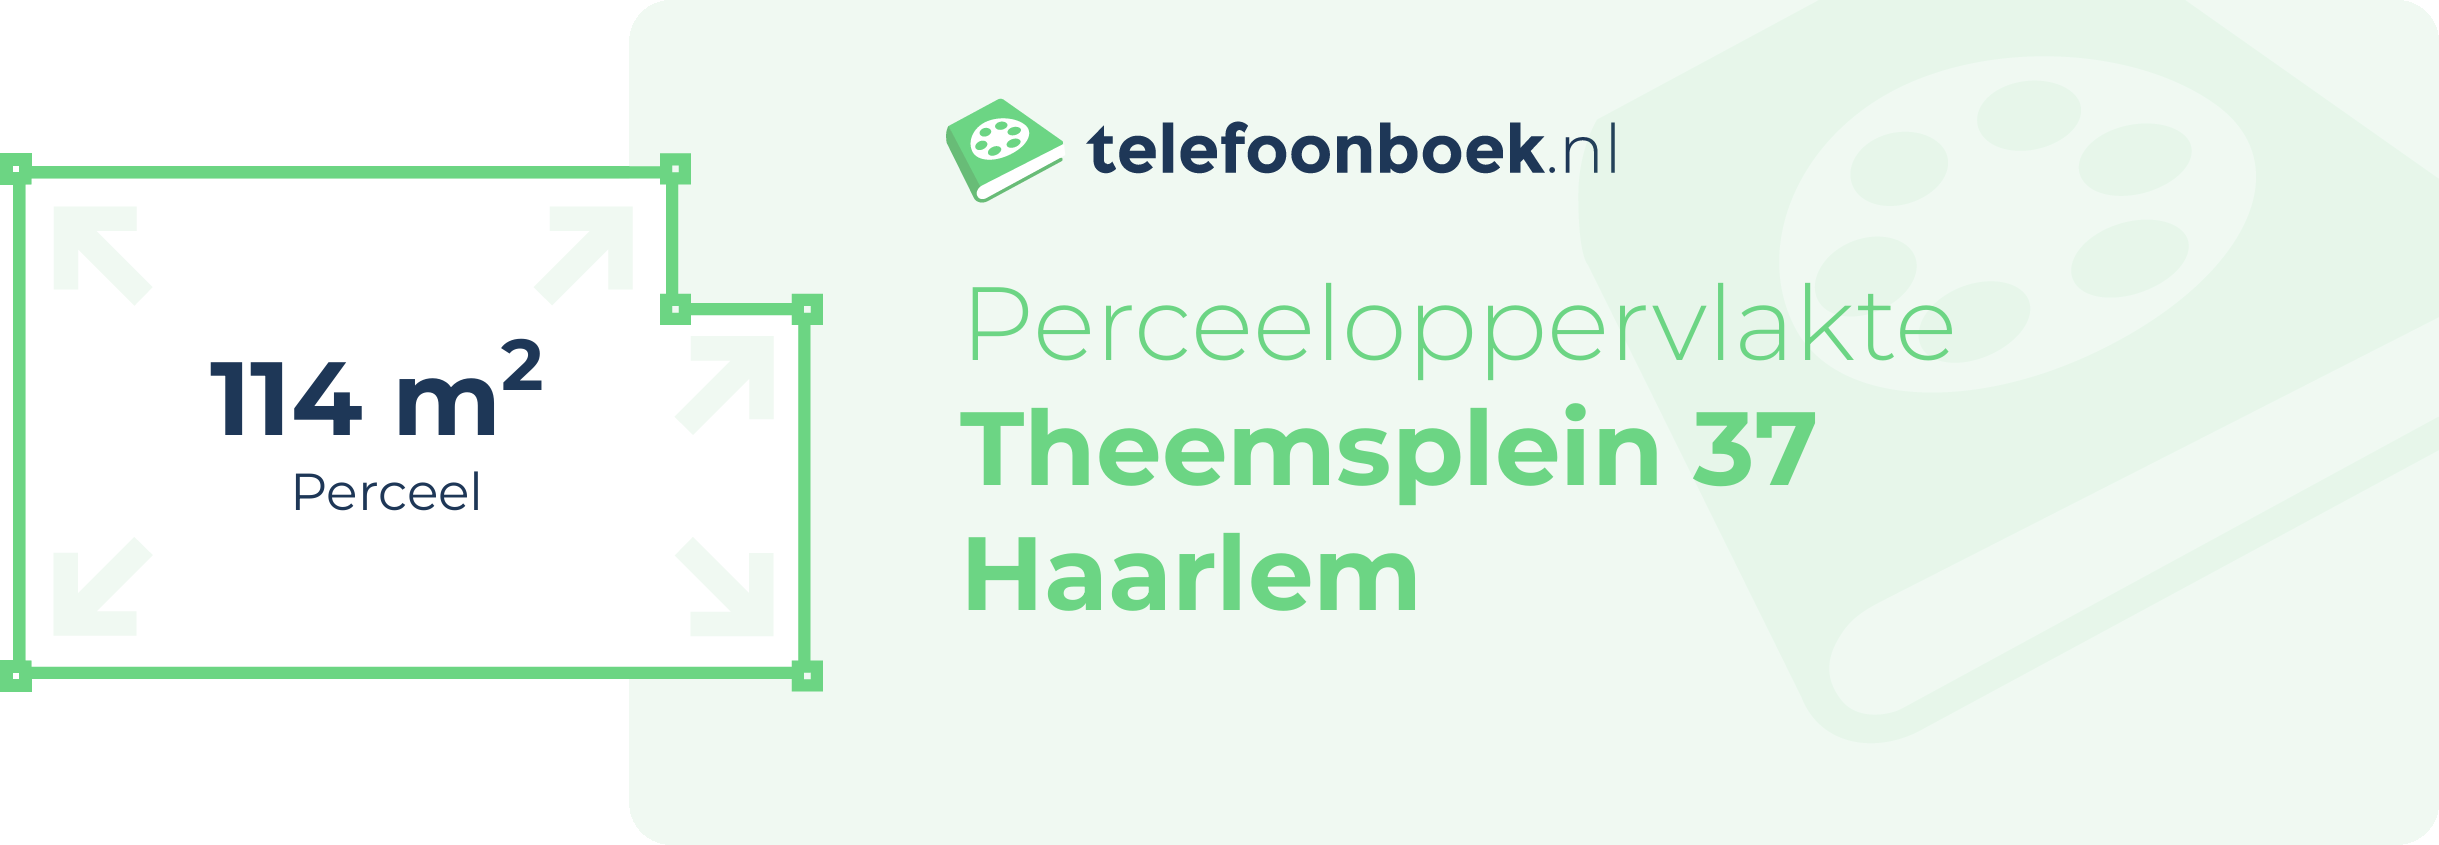 Perceeloppervlakte Theemsplein 37 Haarlem